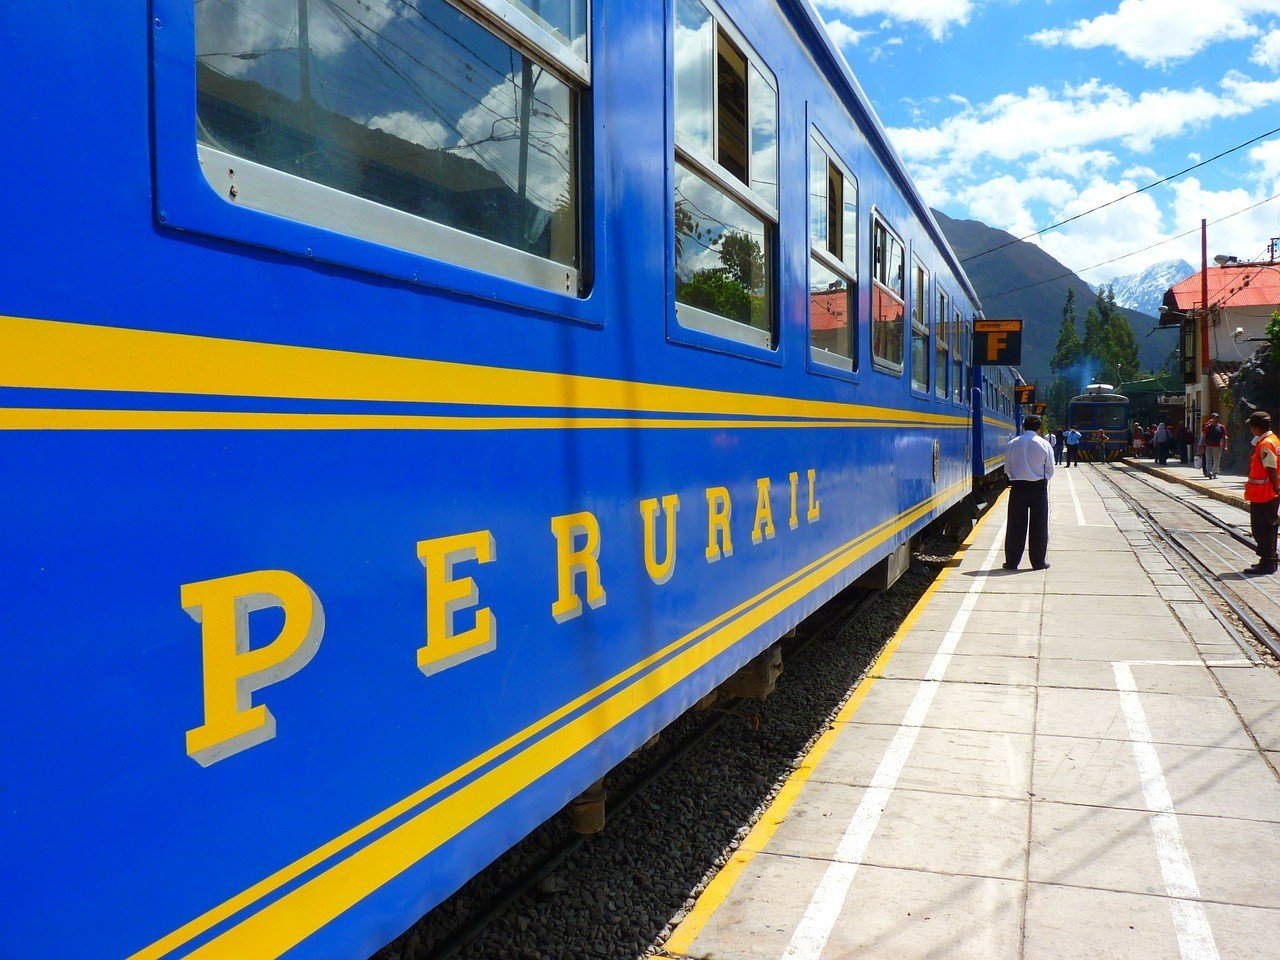 arequipa - PeruRail Station